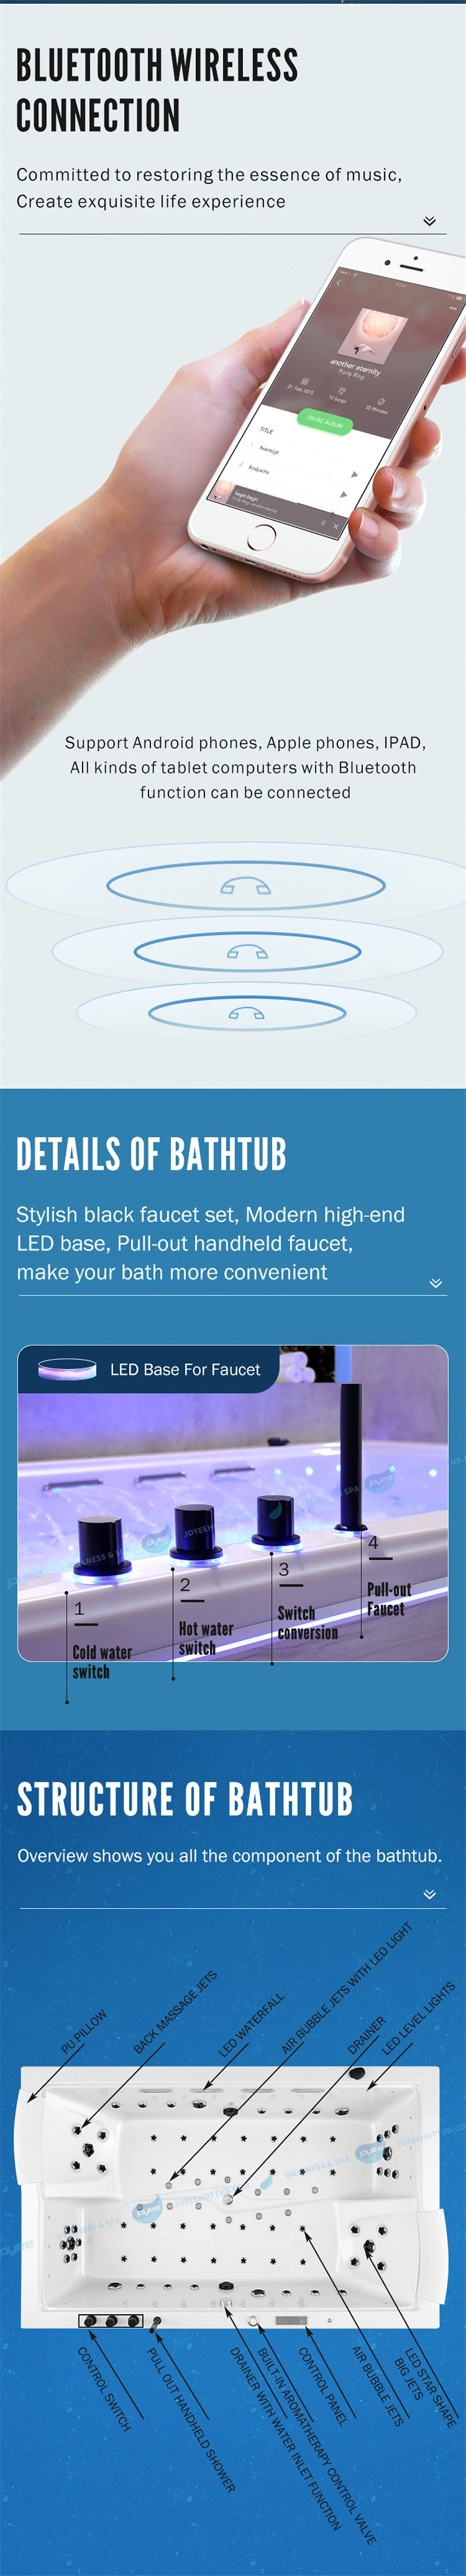 Joyee Large Size Bathtub Pure Acrylic Hot Tub Indoor 2 4 People Massage Bath